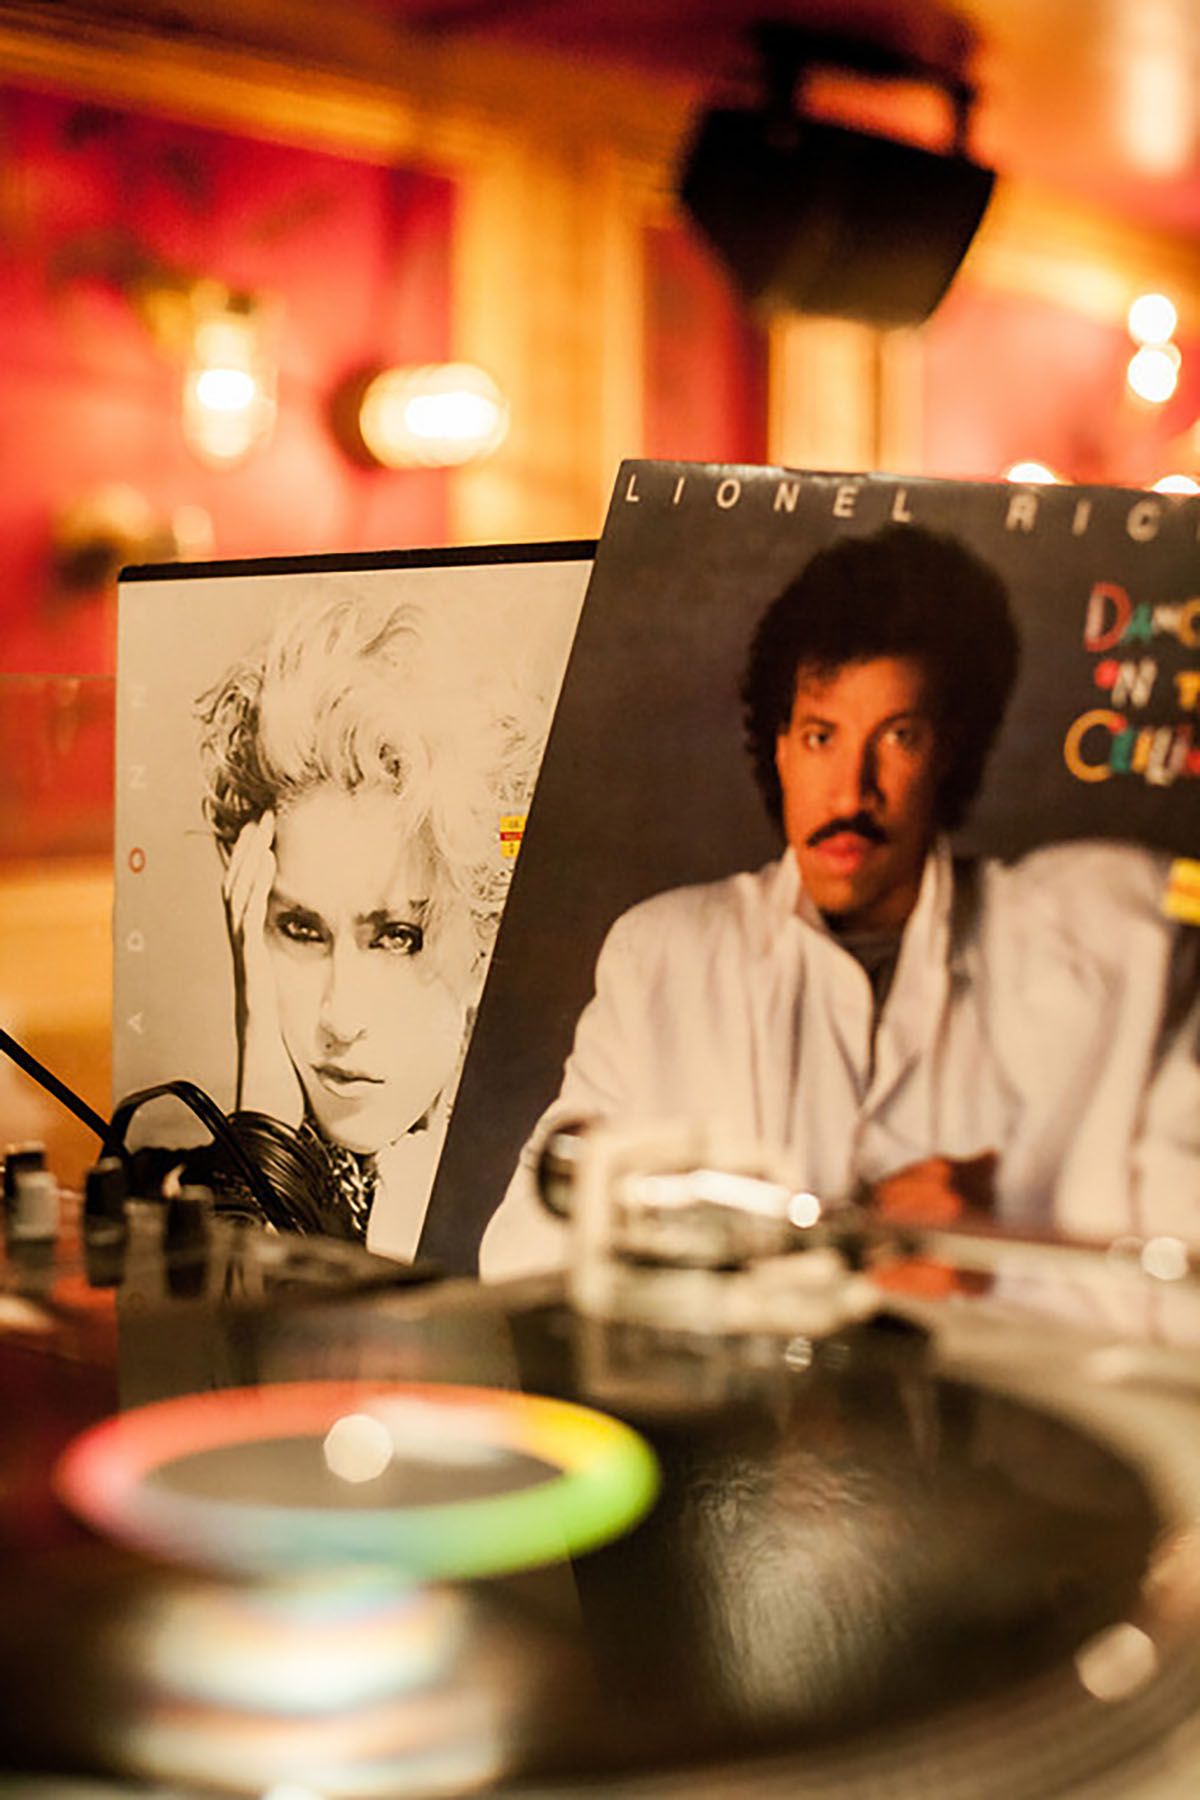 Lionel Richie record and Madonna record